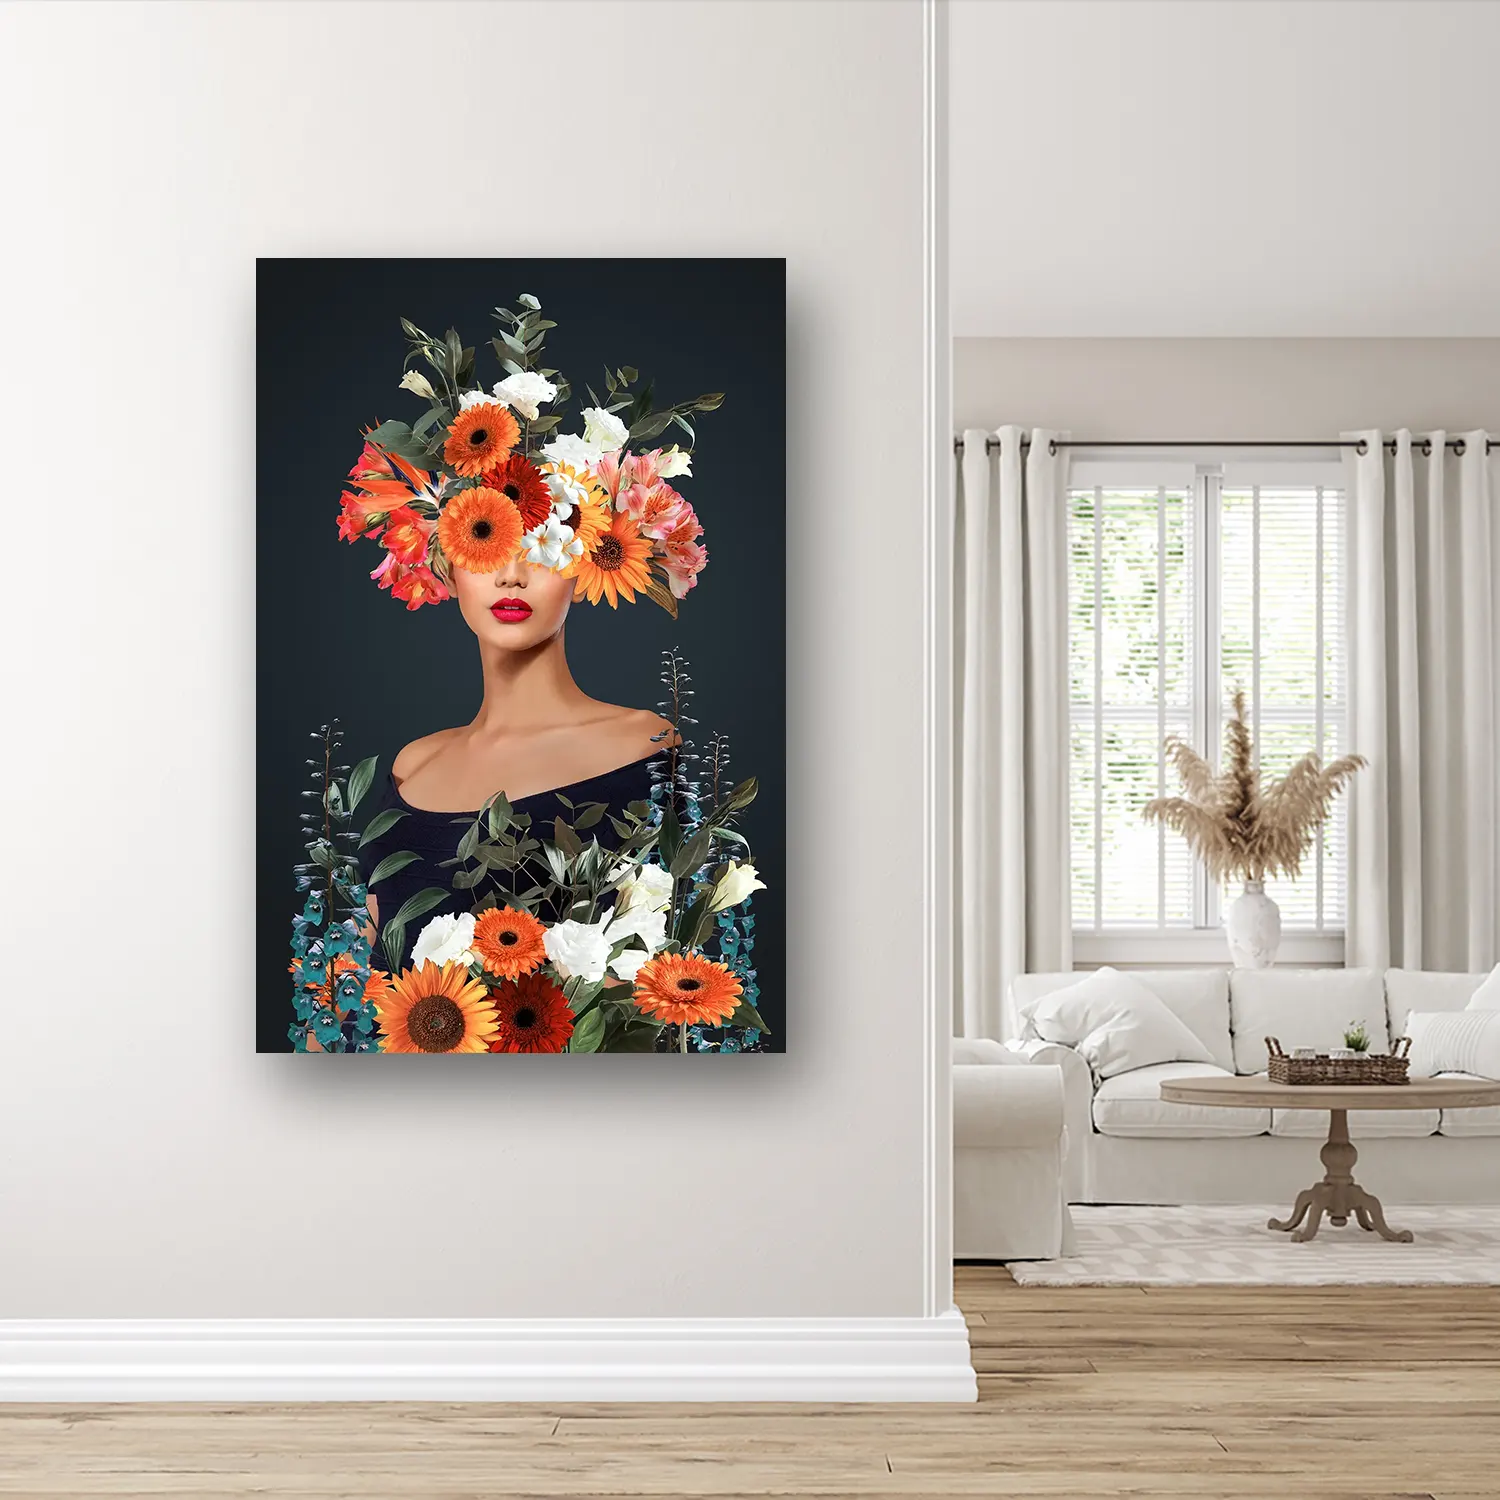 Size Variation 100x150 - Romance Lady - Fotokunst Wanddecoratie Verticaal